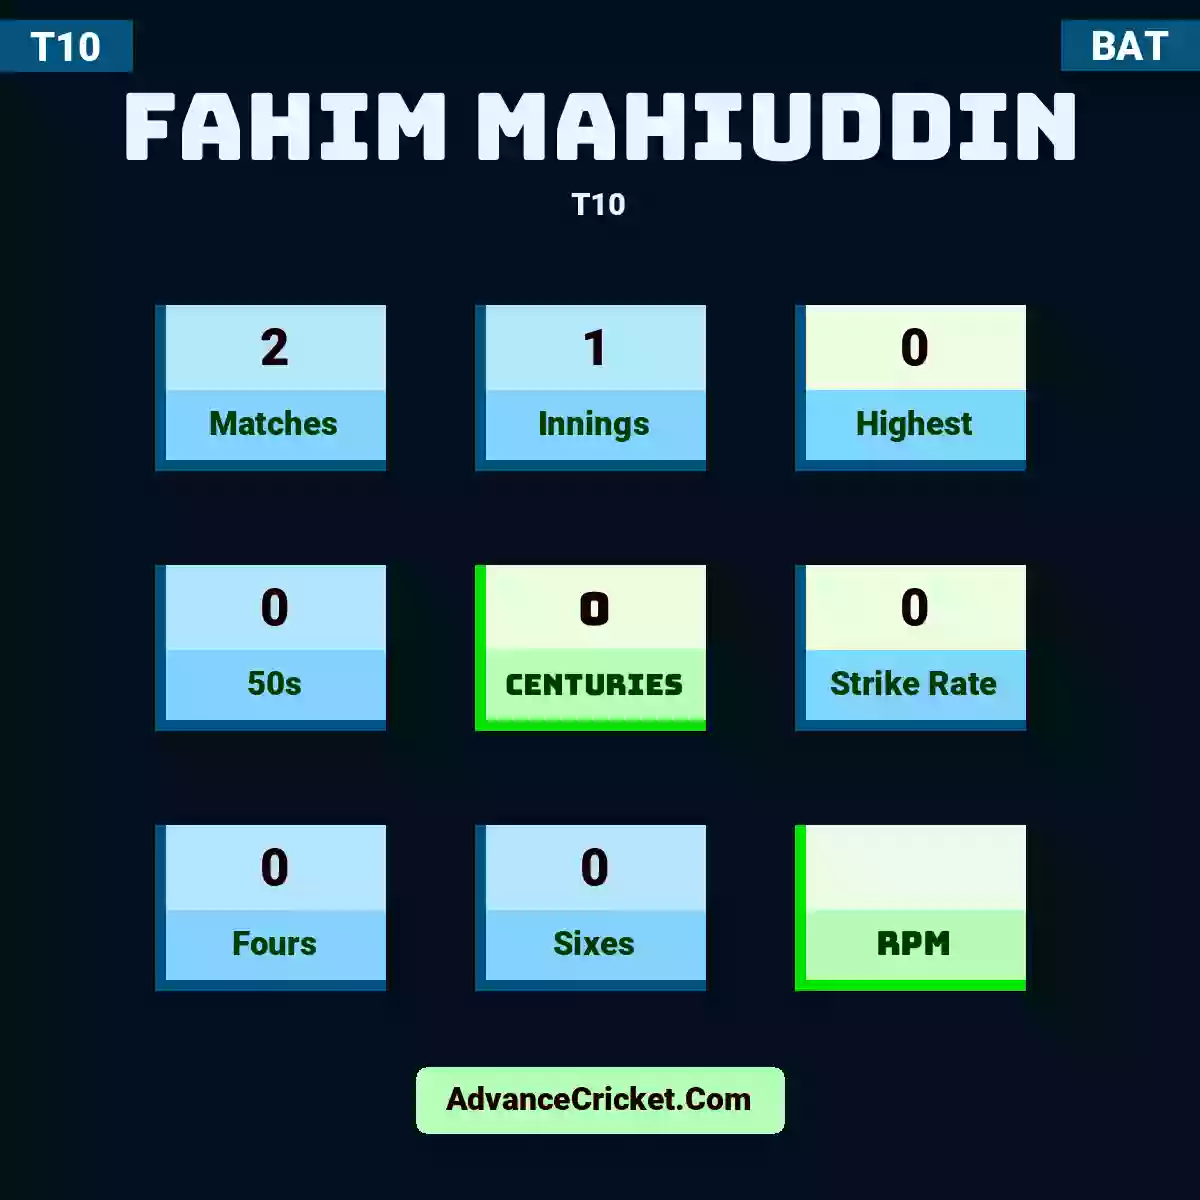 Fahim Mahiuddin T10 , Fahim Mahiuddin played 2 matches, scored 0 runs as highest, 0 half-centuries, and 0 centuries, with a strike rate of 0. F.Mahiuddin hit 0 fours and 0 sixes.